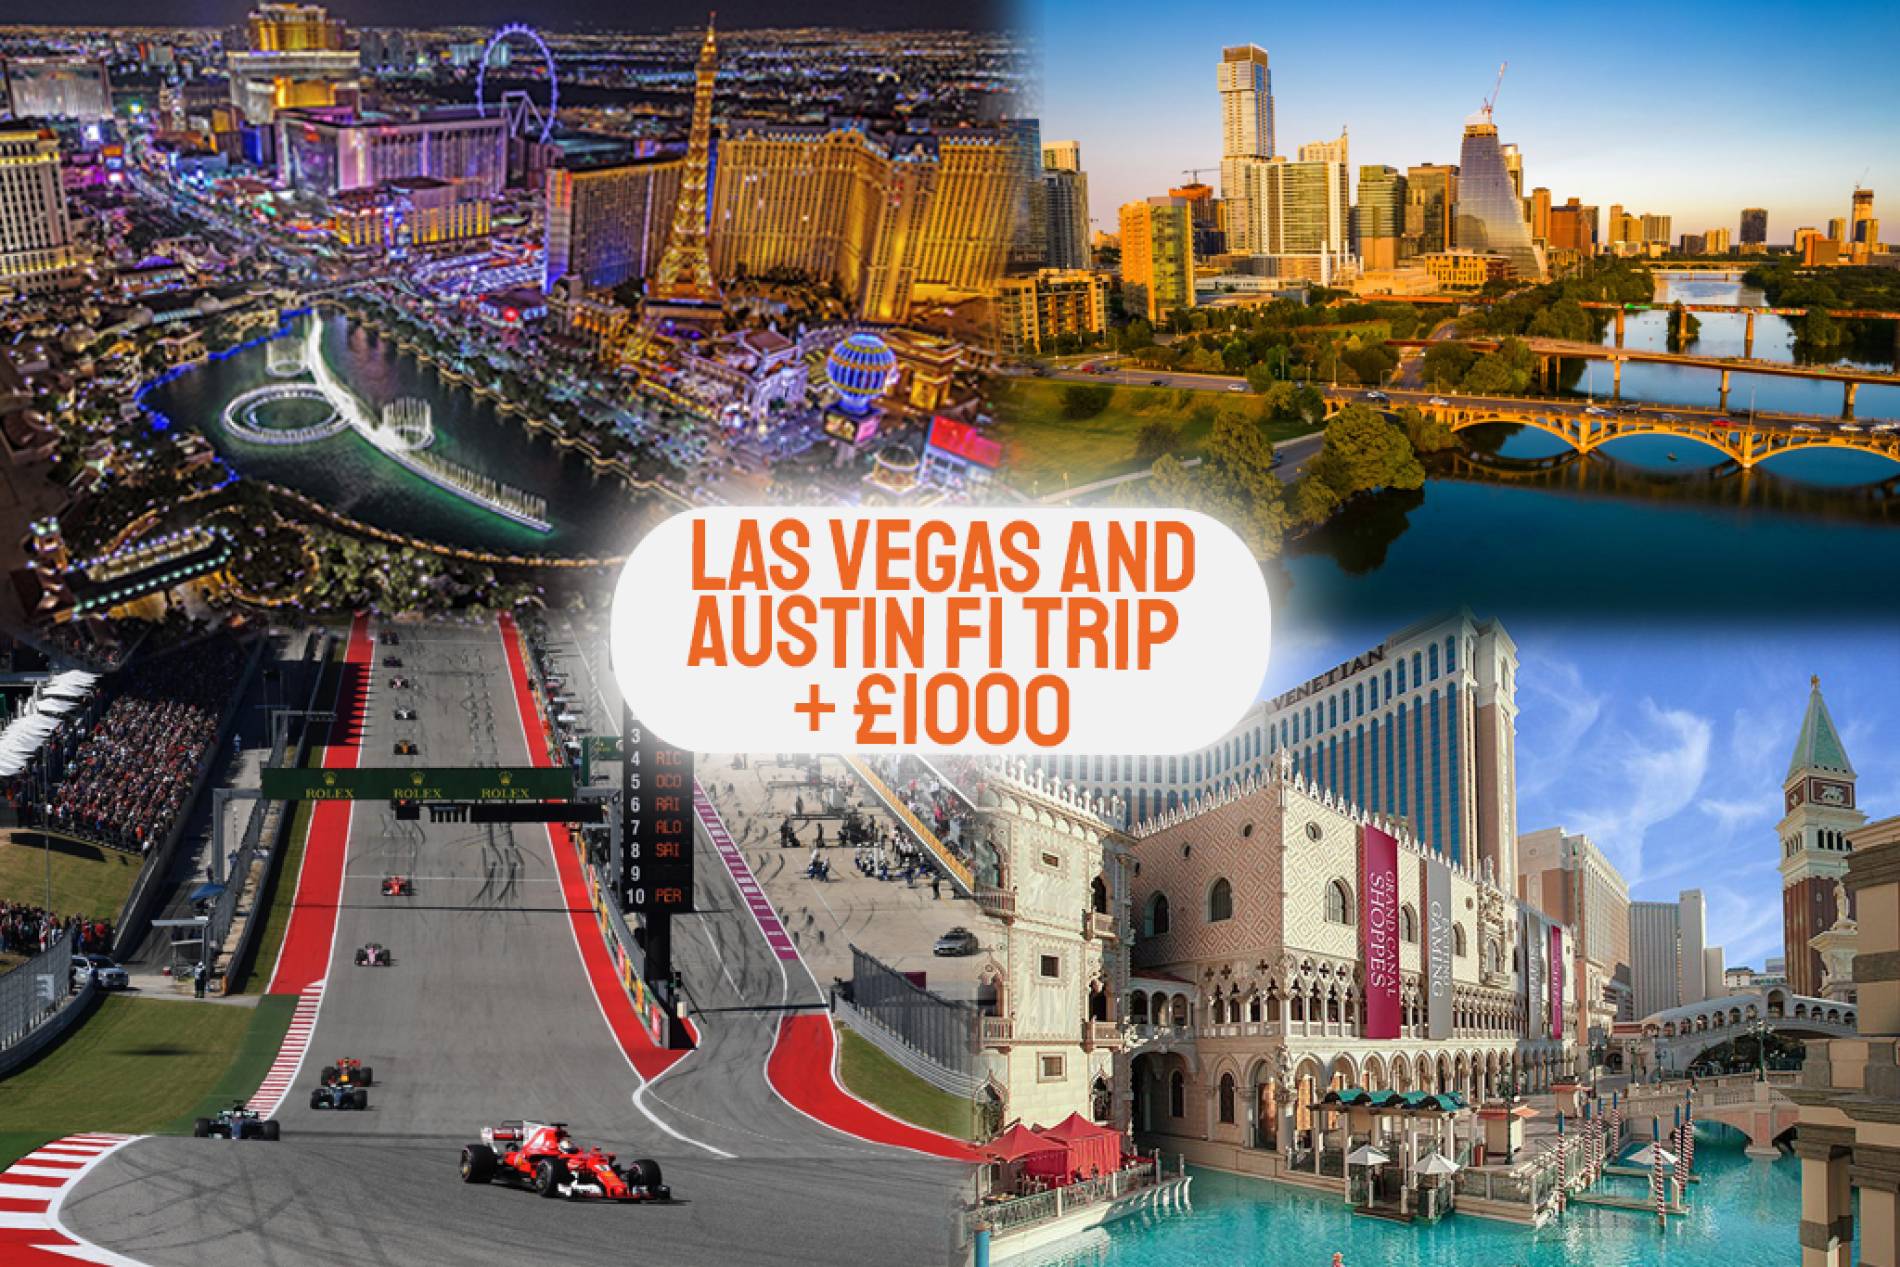 Las Vegas And Austin F1 Trip + £1000